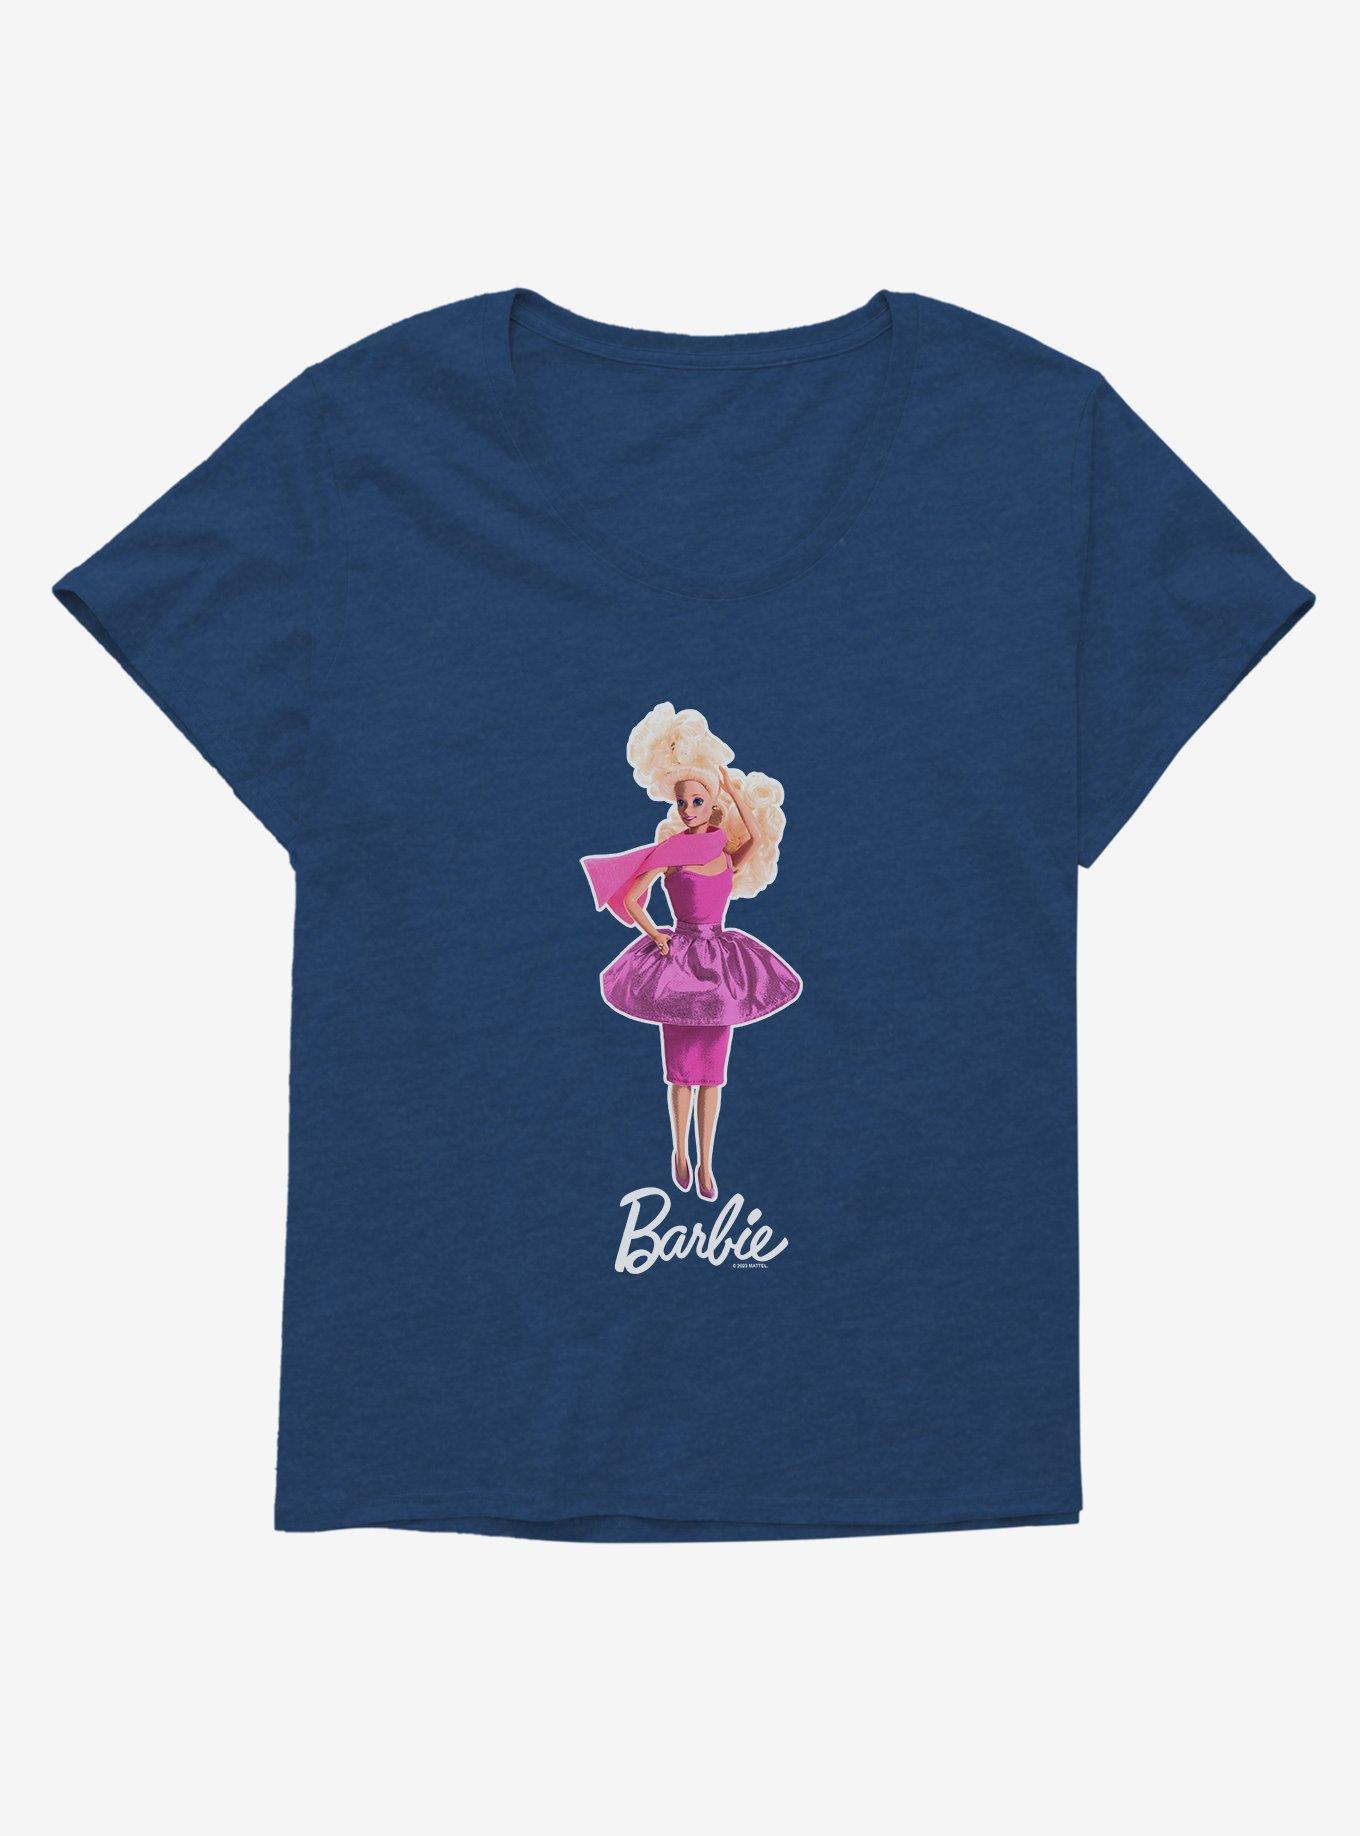  Barbie Girls'  Exclusive 100% Combed Cotton